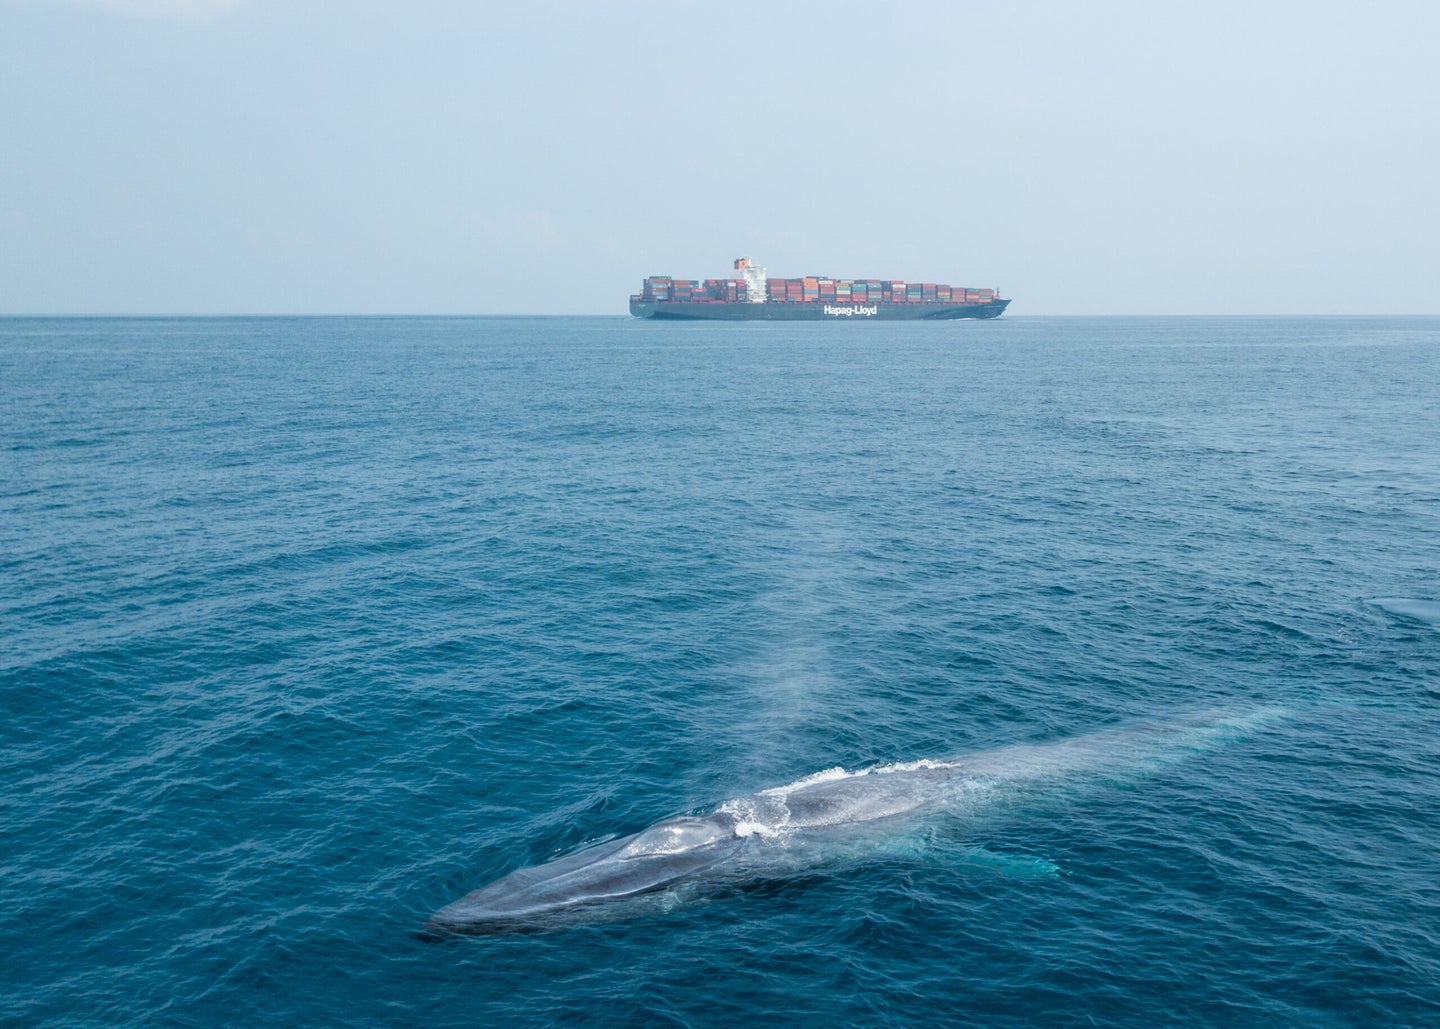 A blue whale near Sri Lanka and a container ship.